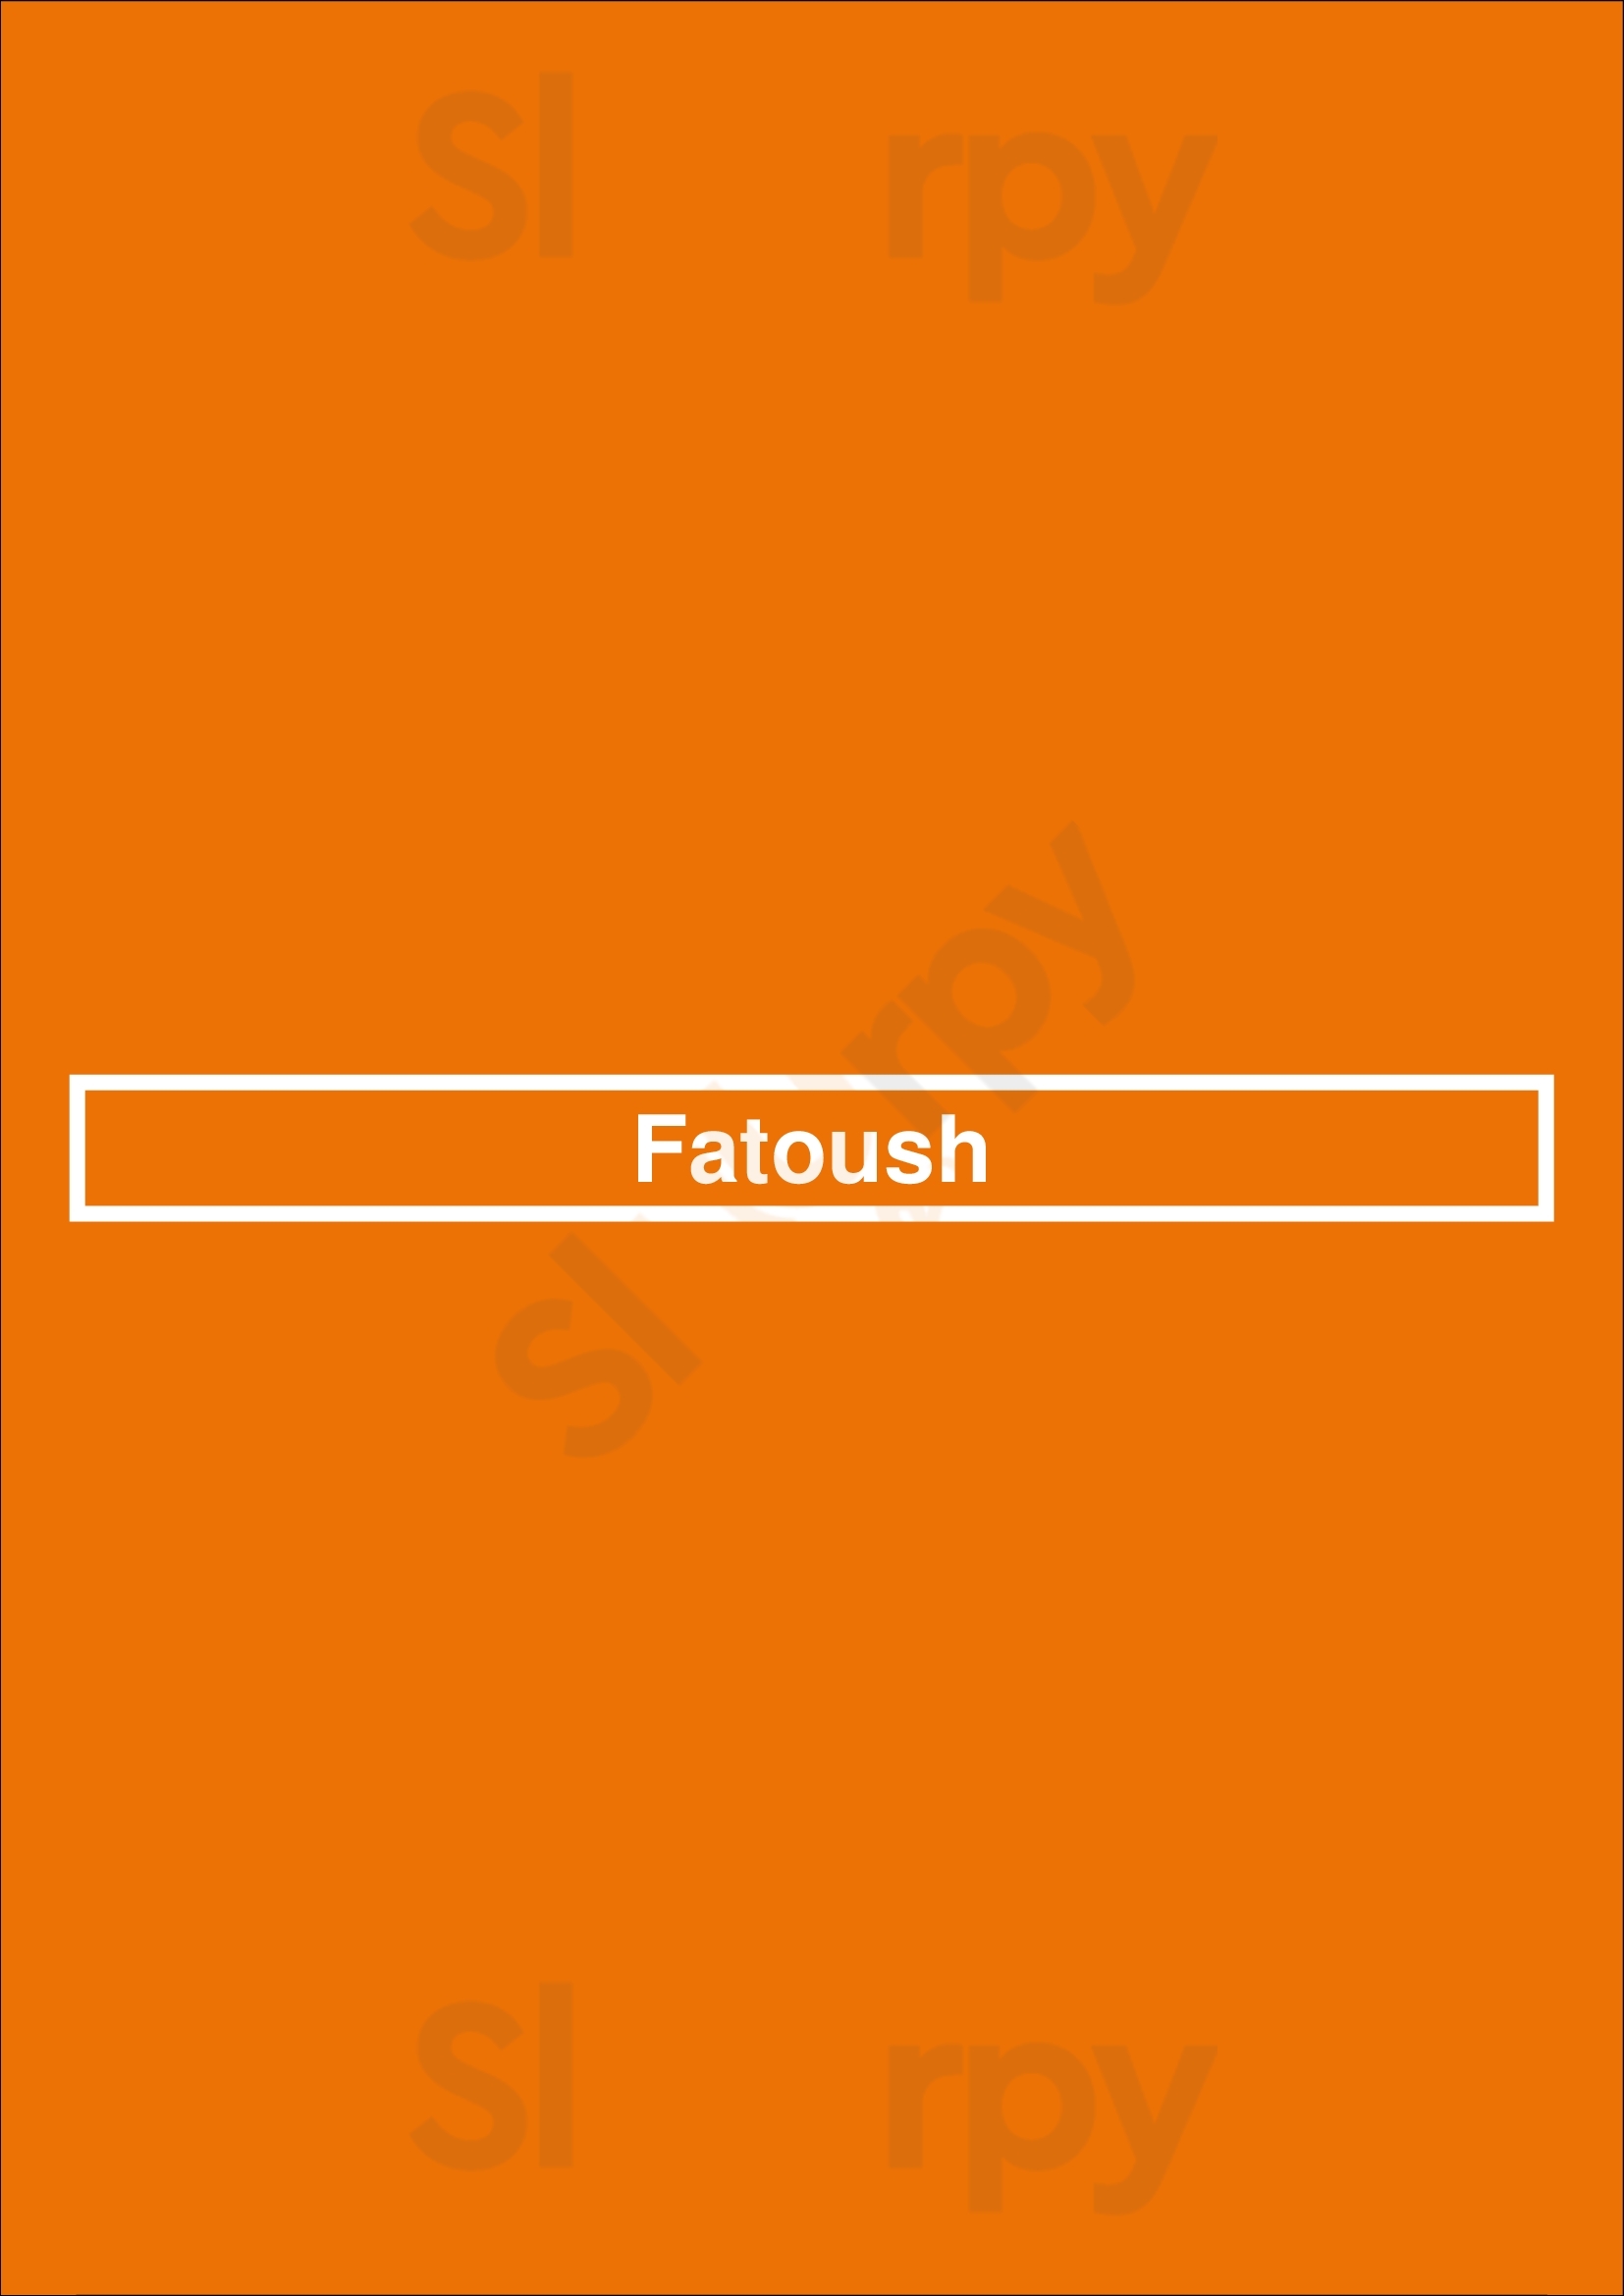 Fatoush Groningen Menu - 1